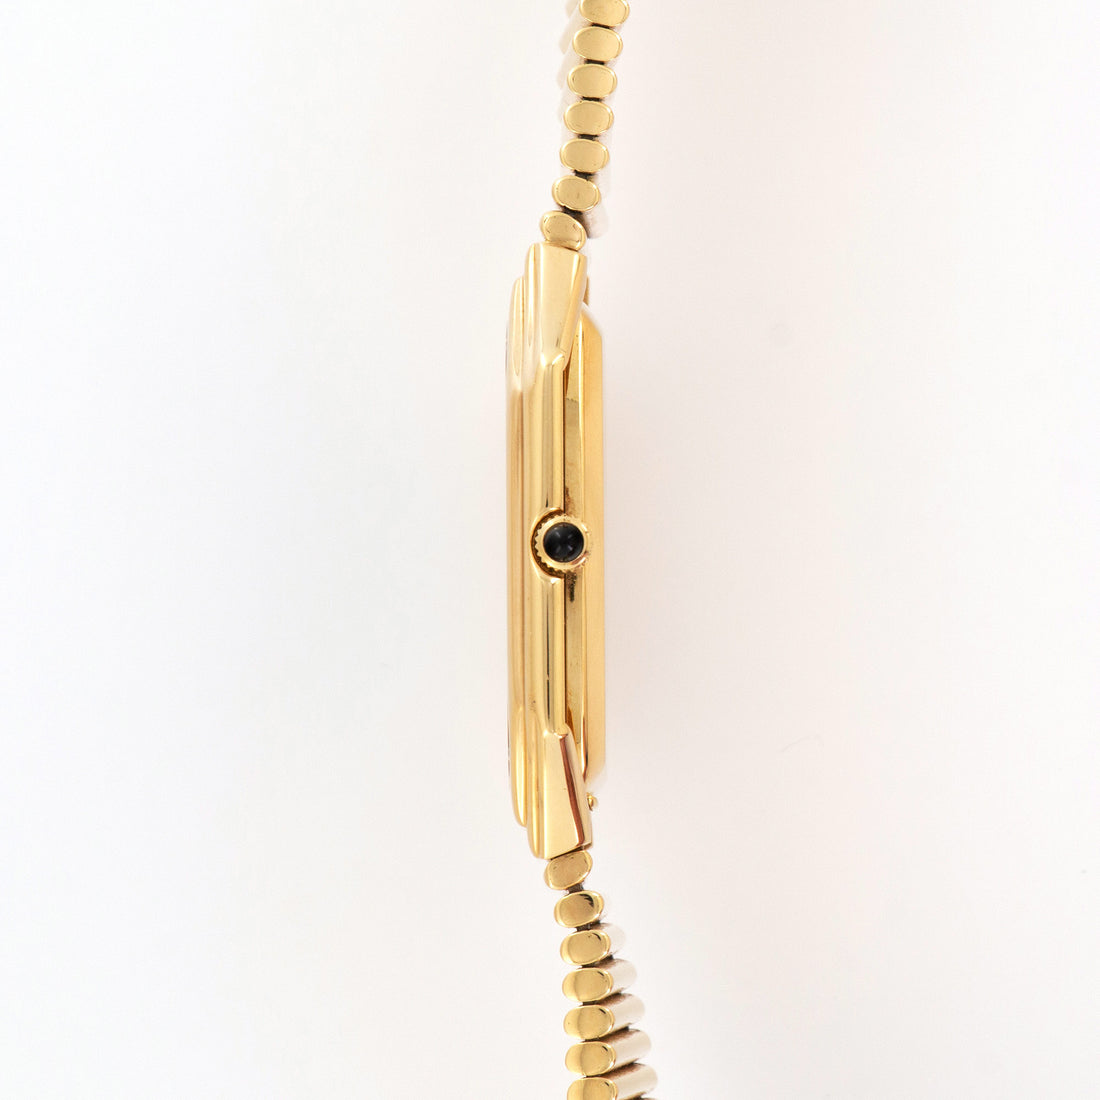 Patek Philippe Yellow Gold Onyx Watch, Ref. 3729